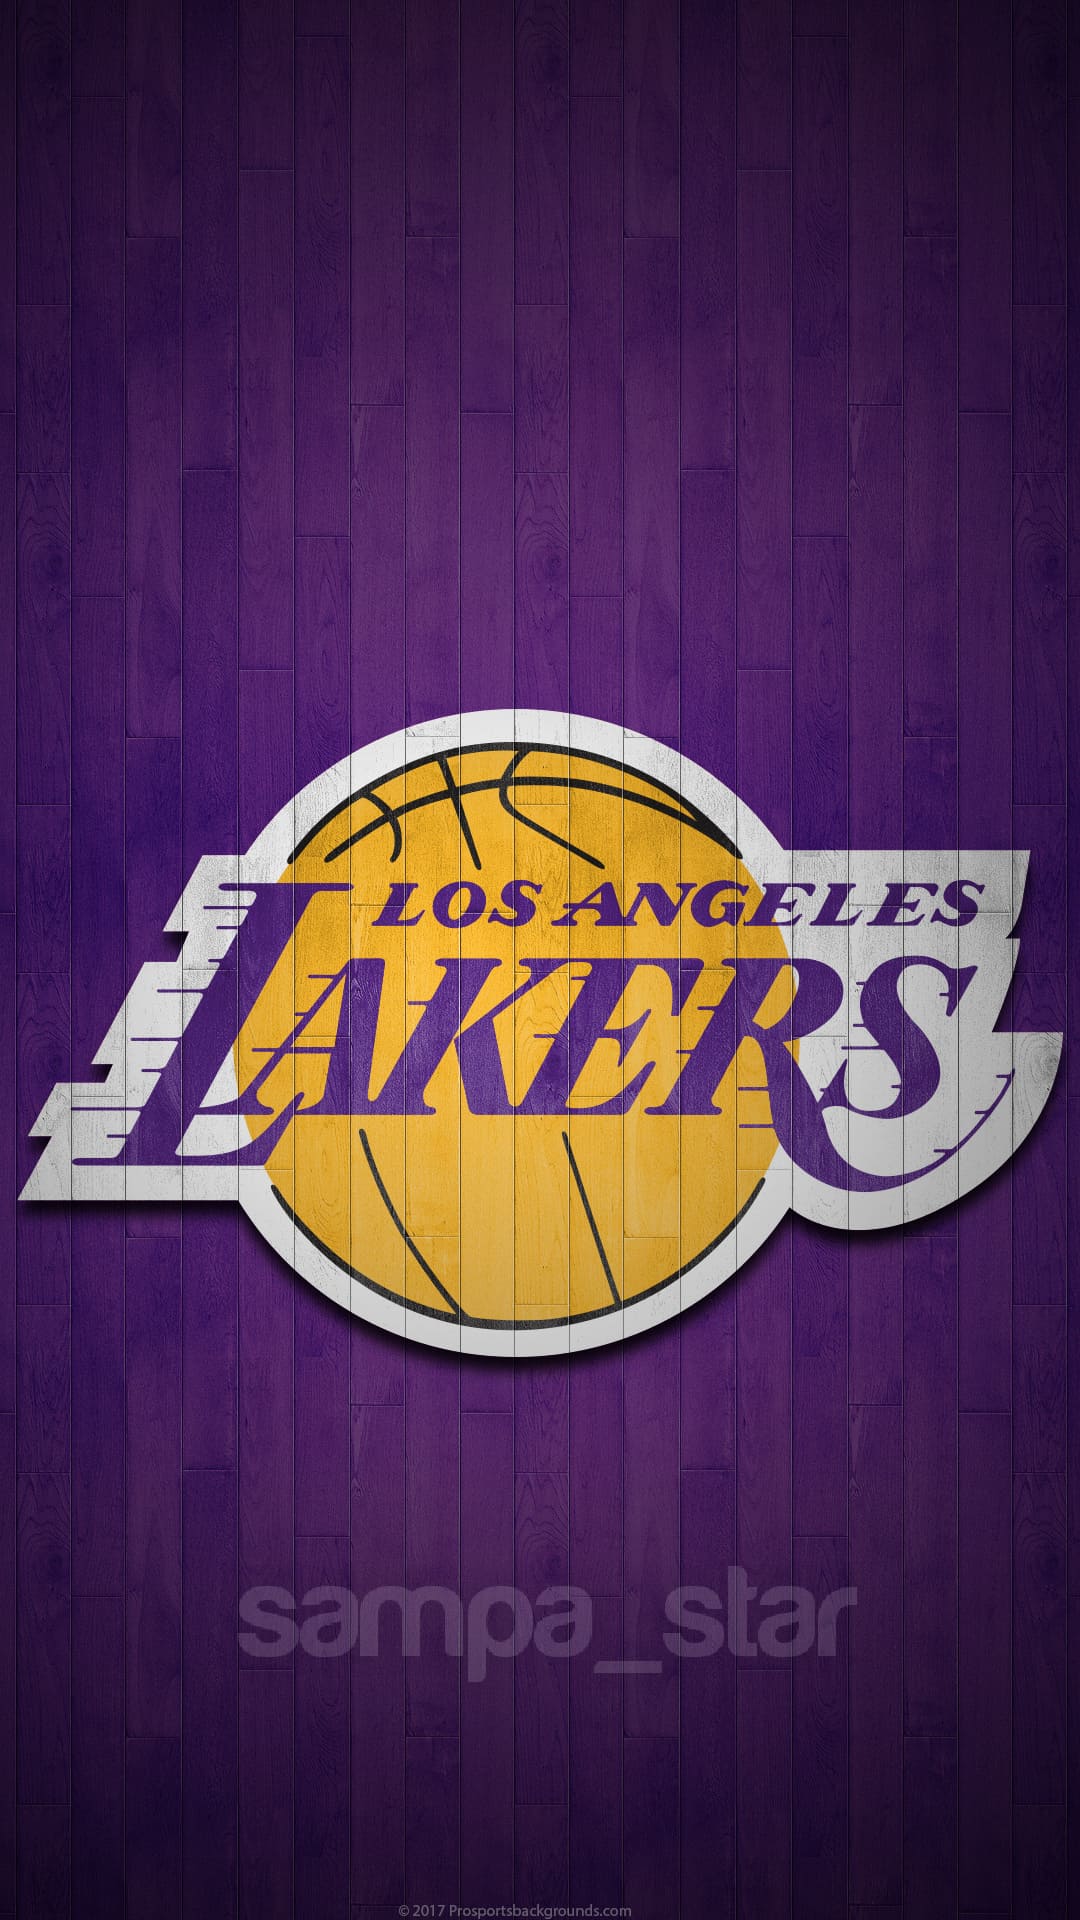 Los Angeles Lakers Wallpaper 4k